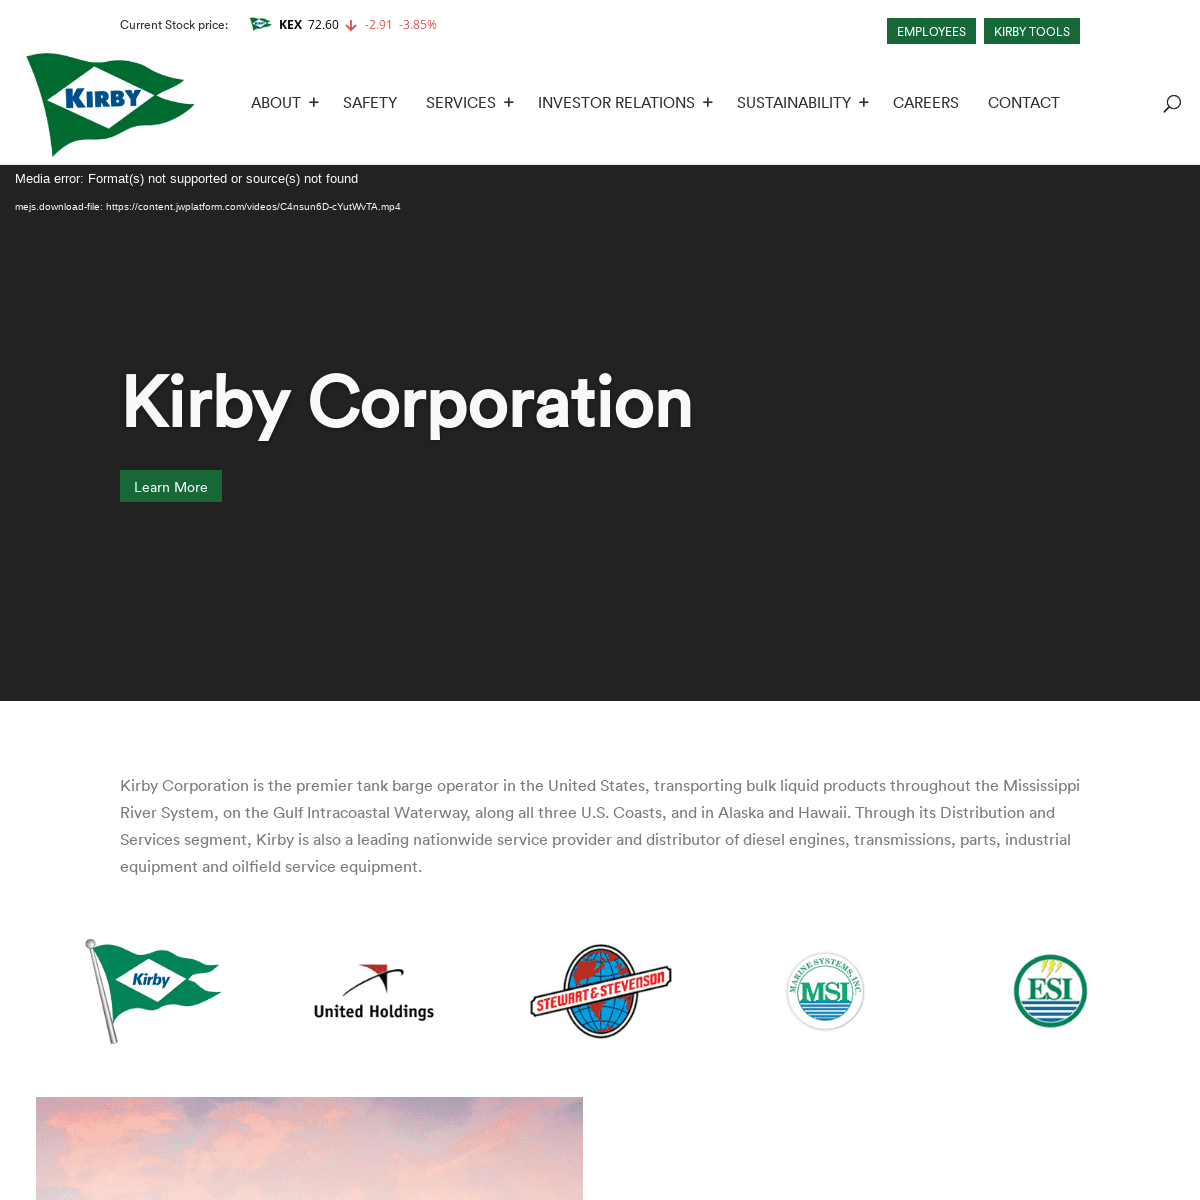 Kirby Corporation | Marine Transportation | Distribution & Services